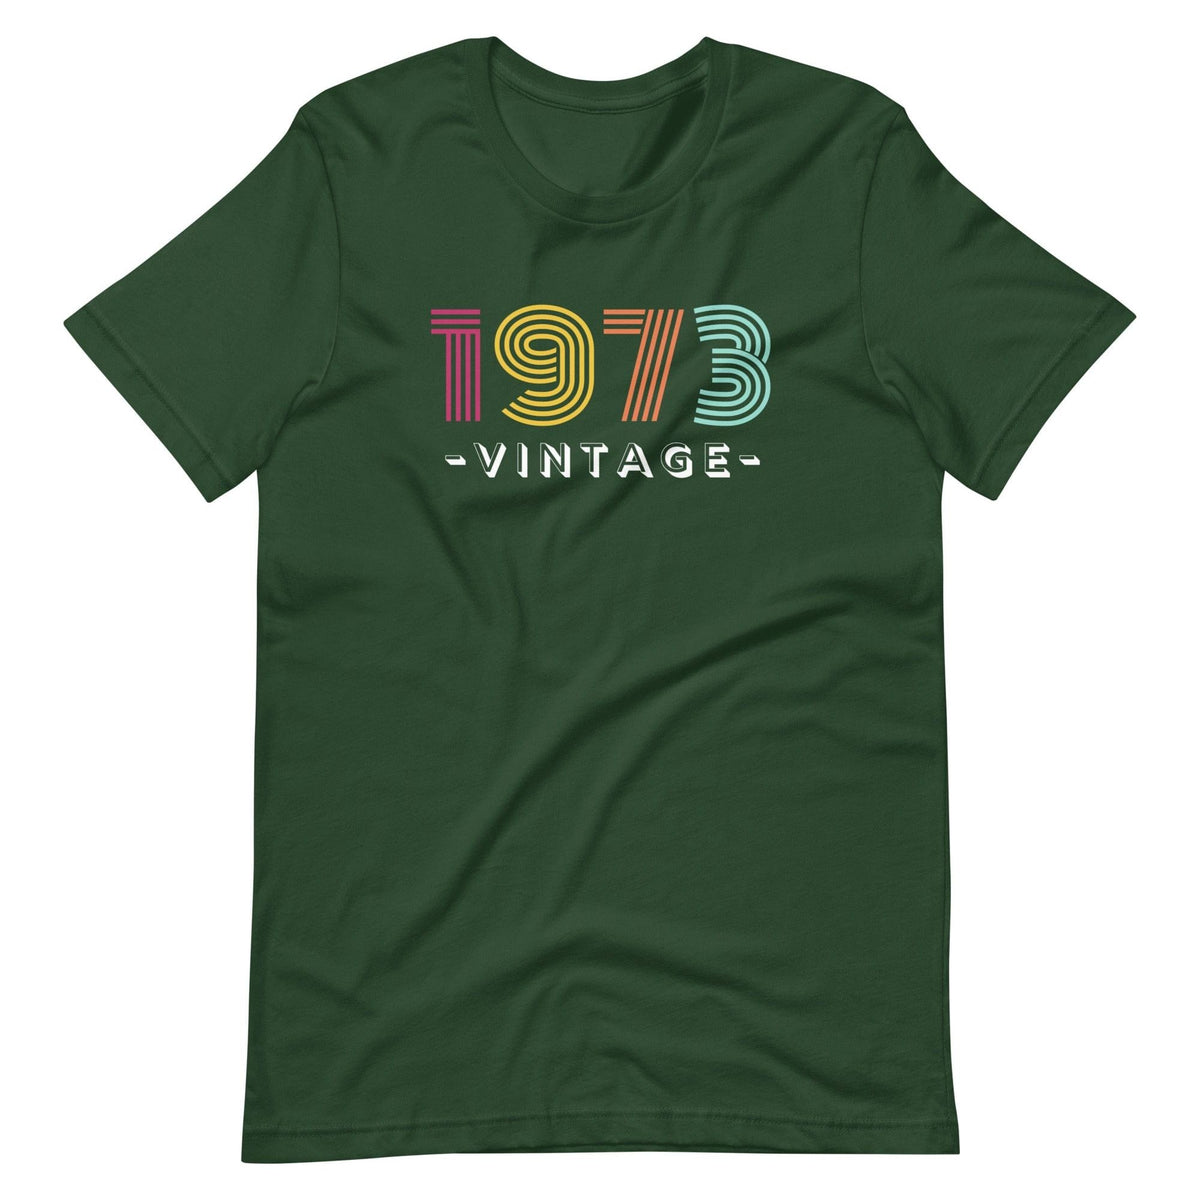 Karma Kiss Forest / S 1973 Vintage Unisex T-Shirt